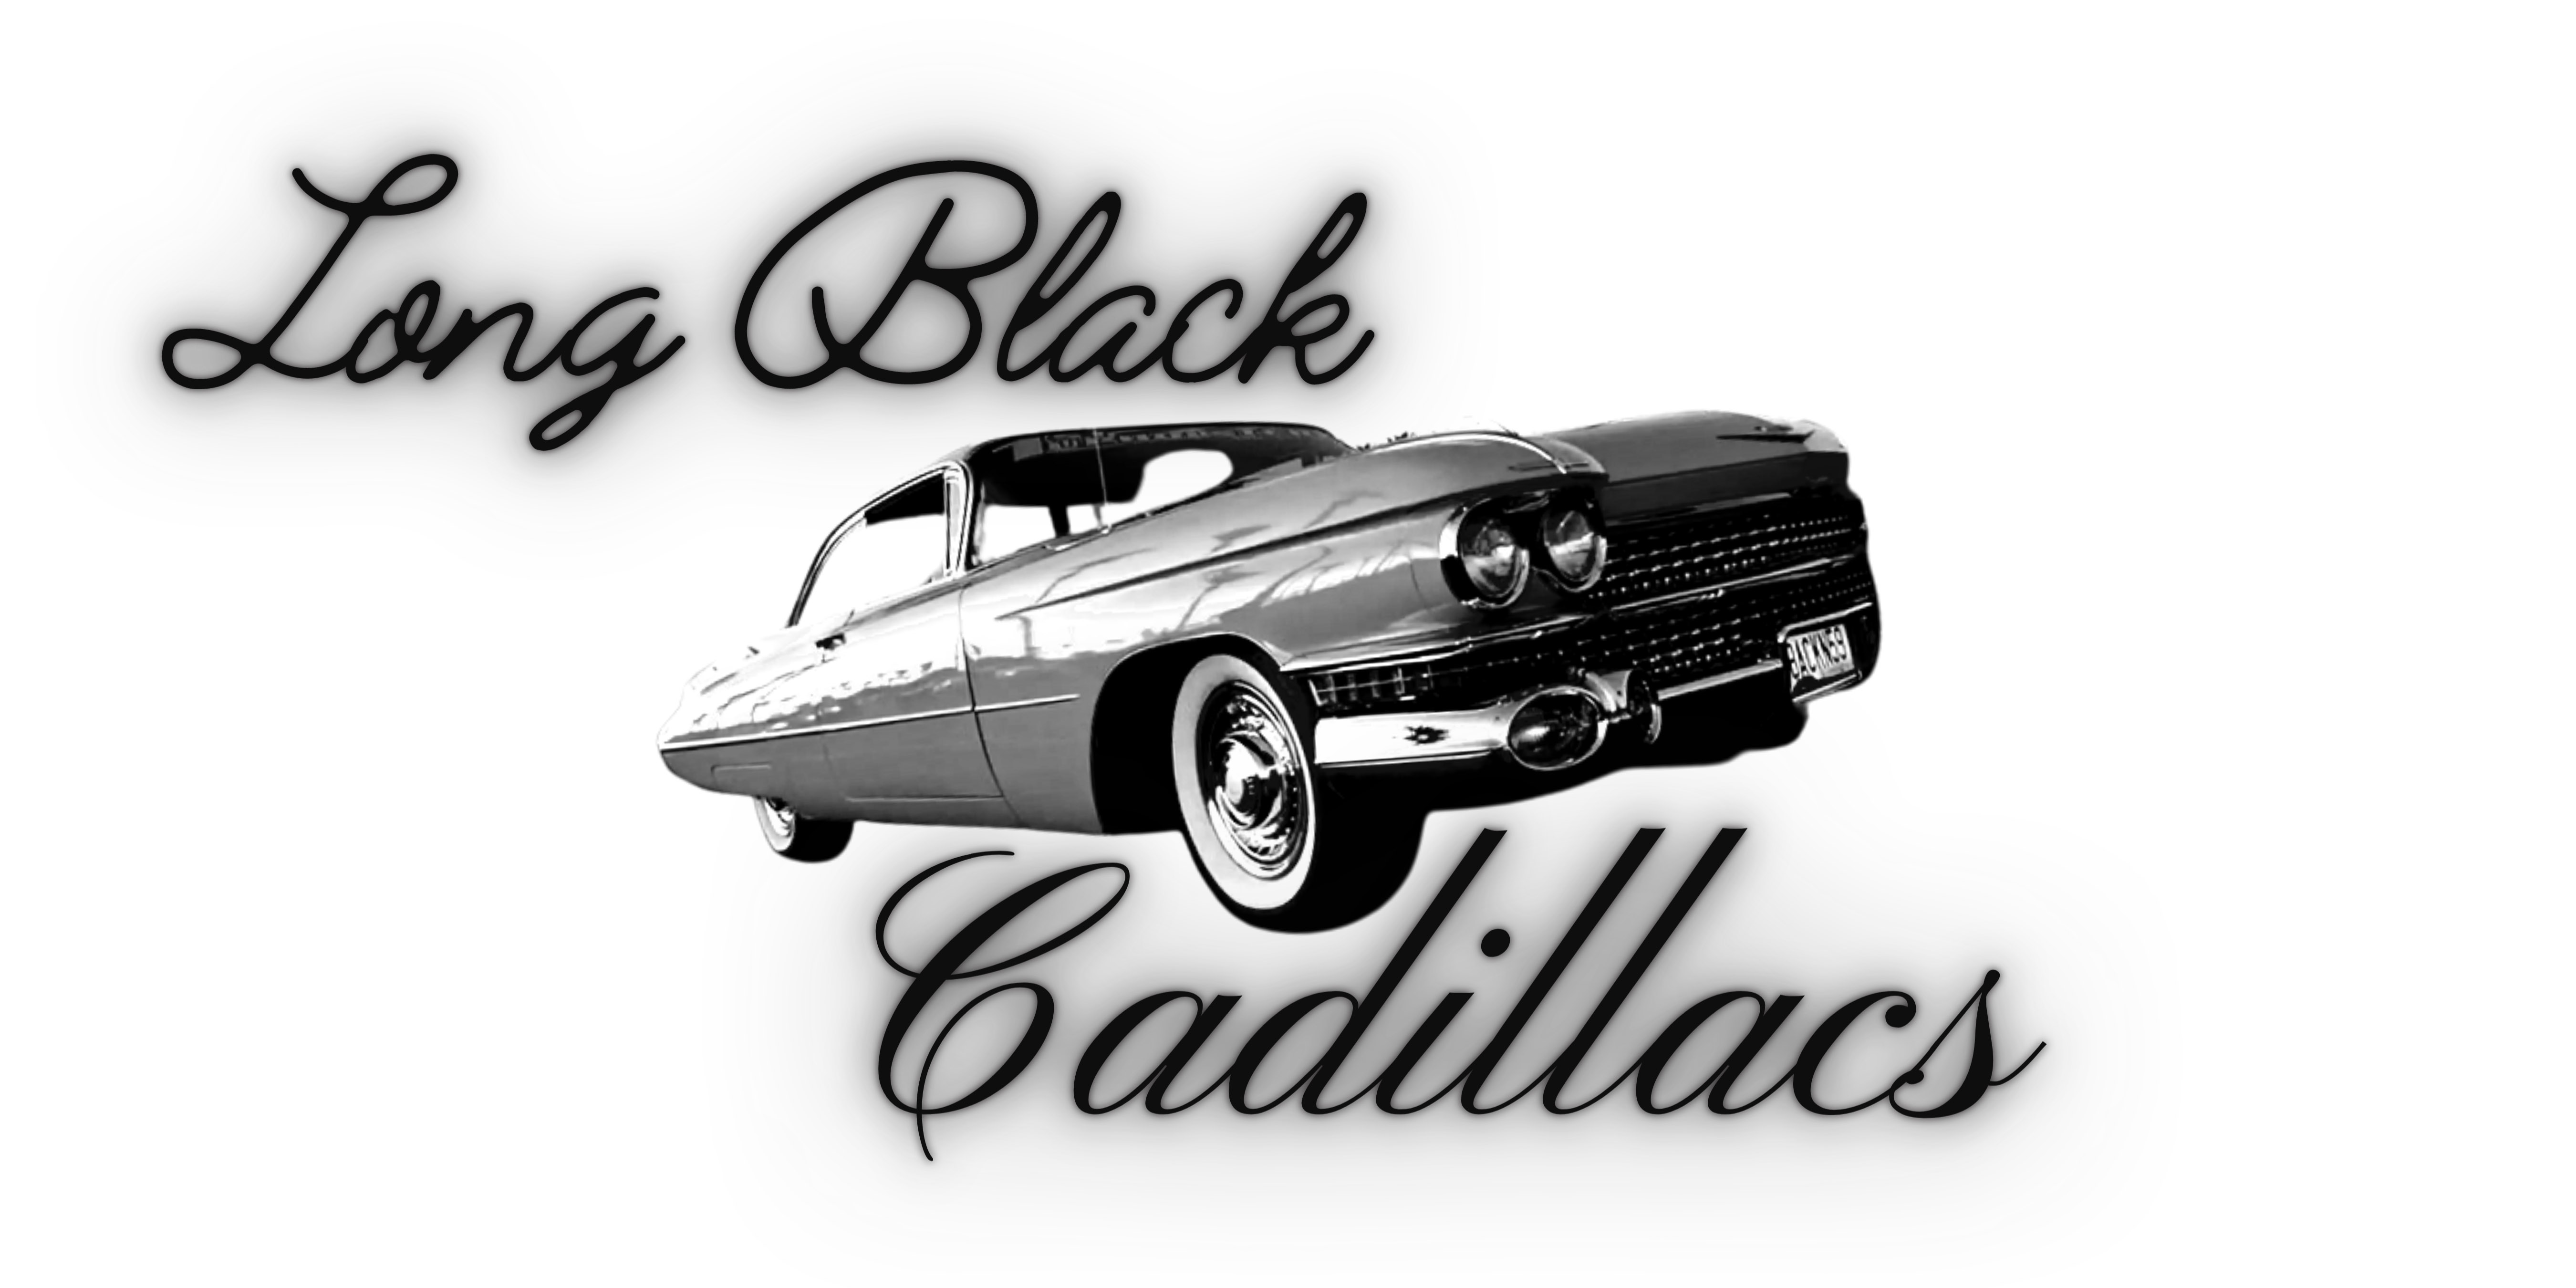 Long Black Cadillacs